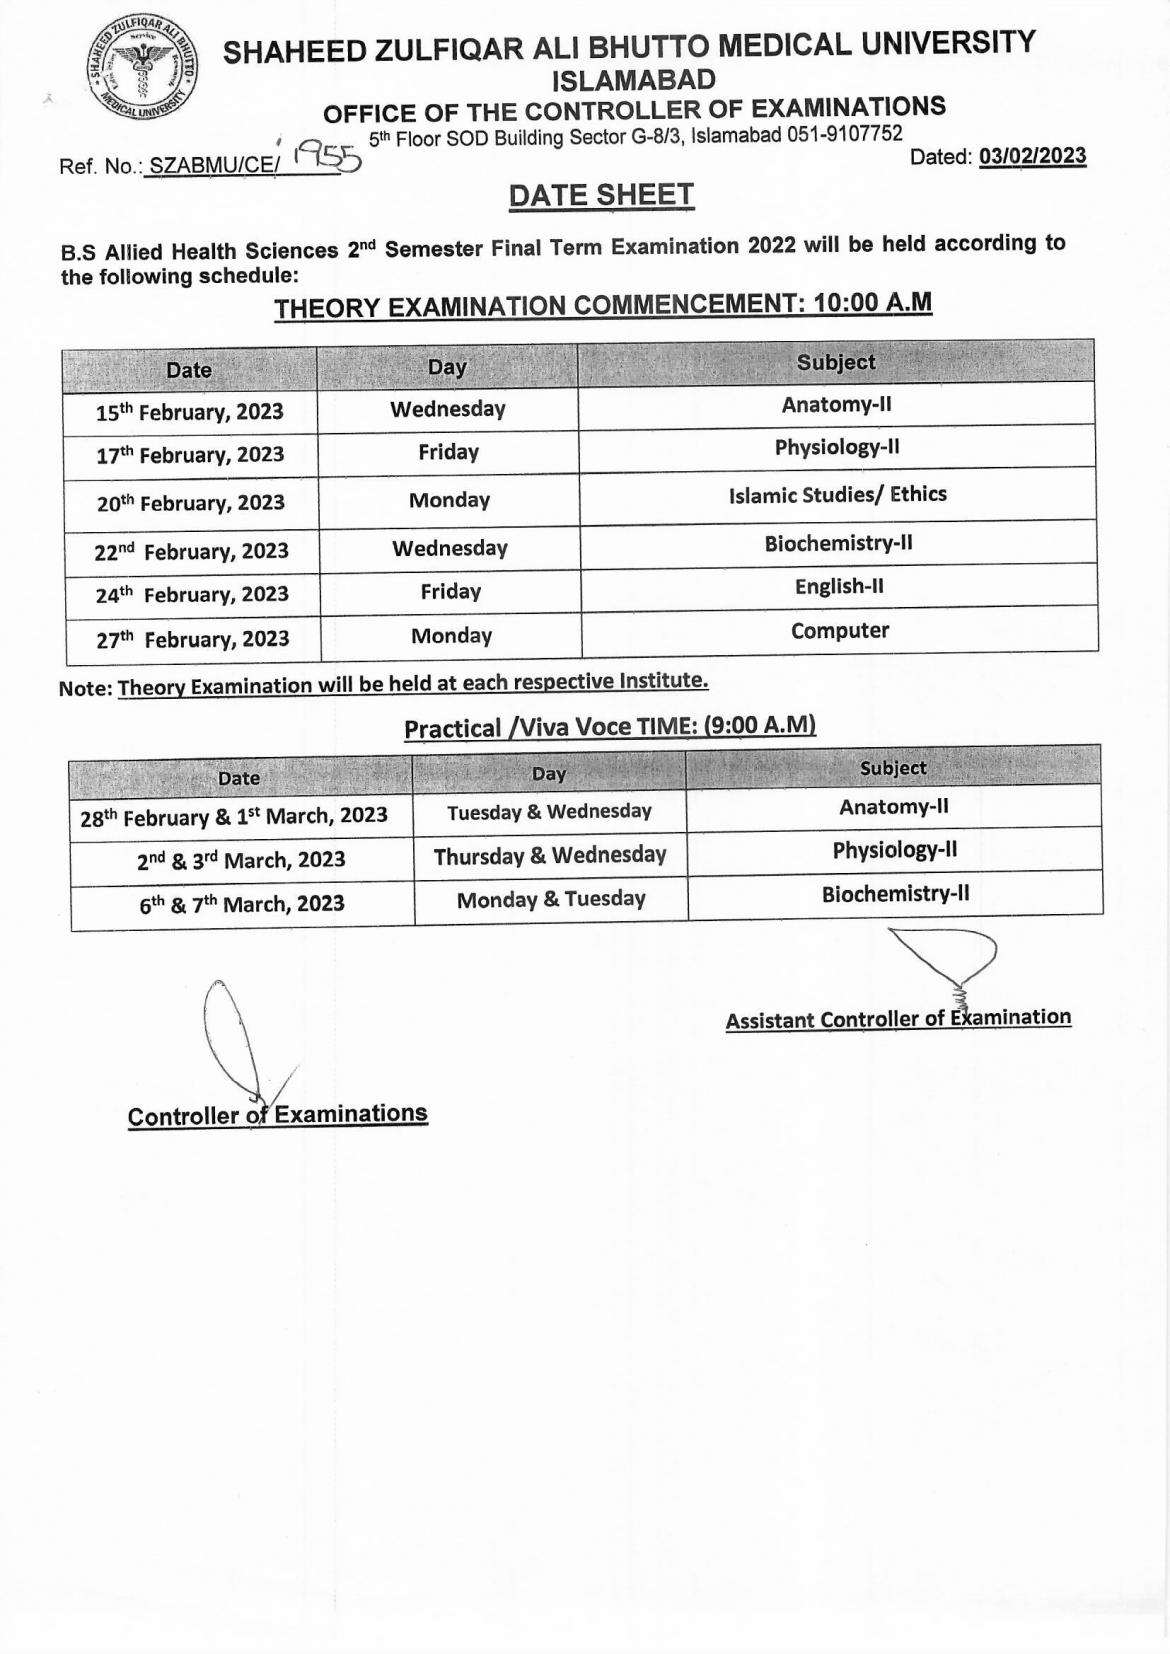 Date Sheet - BS AHS Final Term Examination 2022